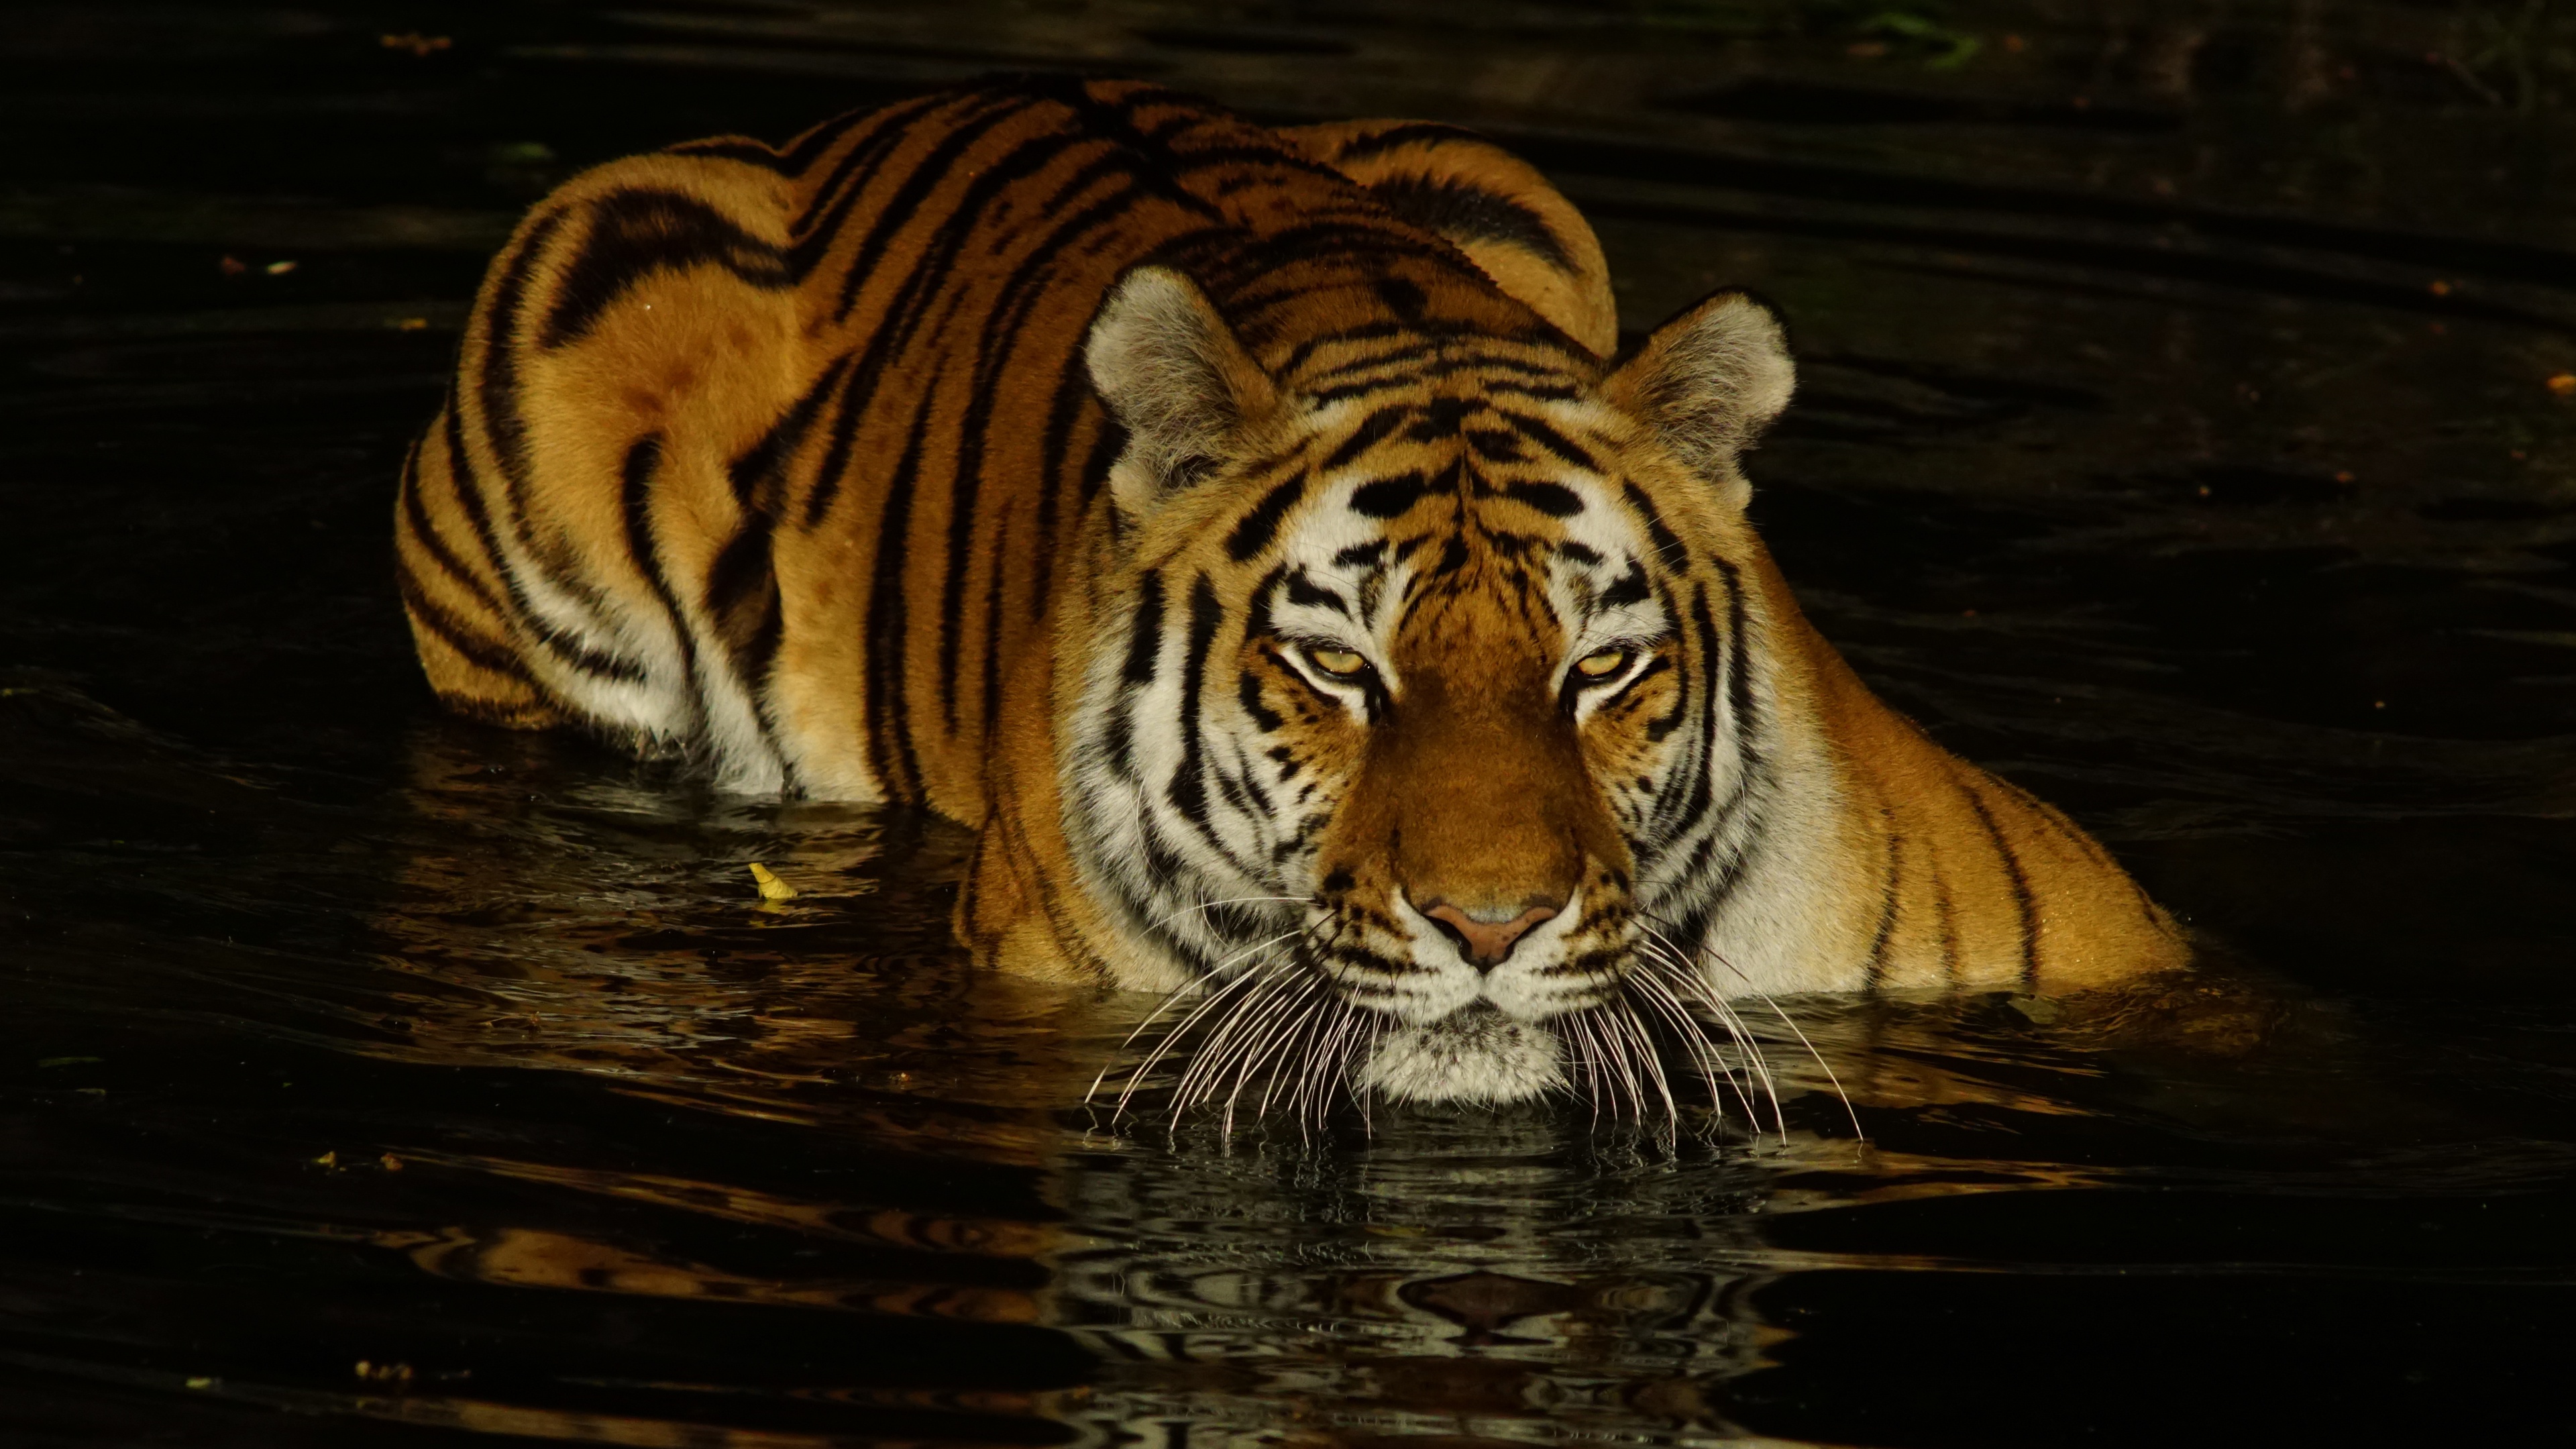 Download Animal Tiger 4k Ultra Hd Wallpaper